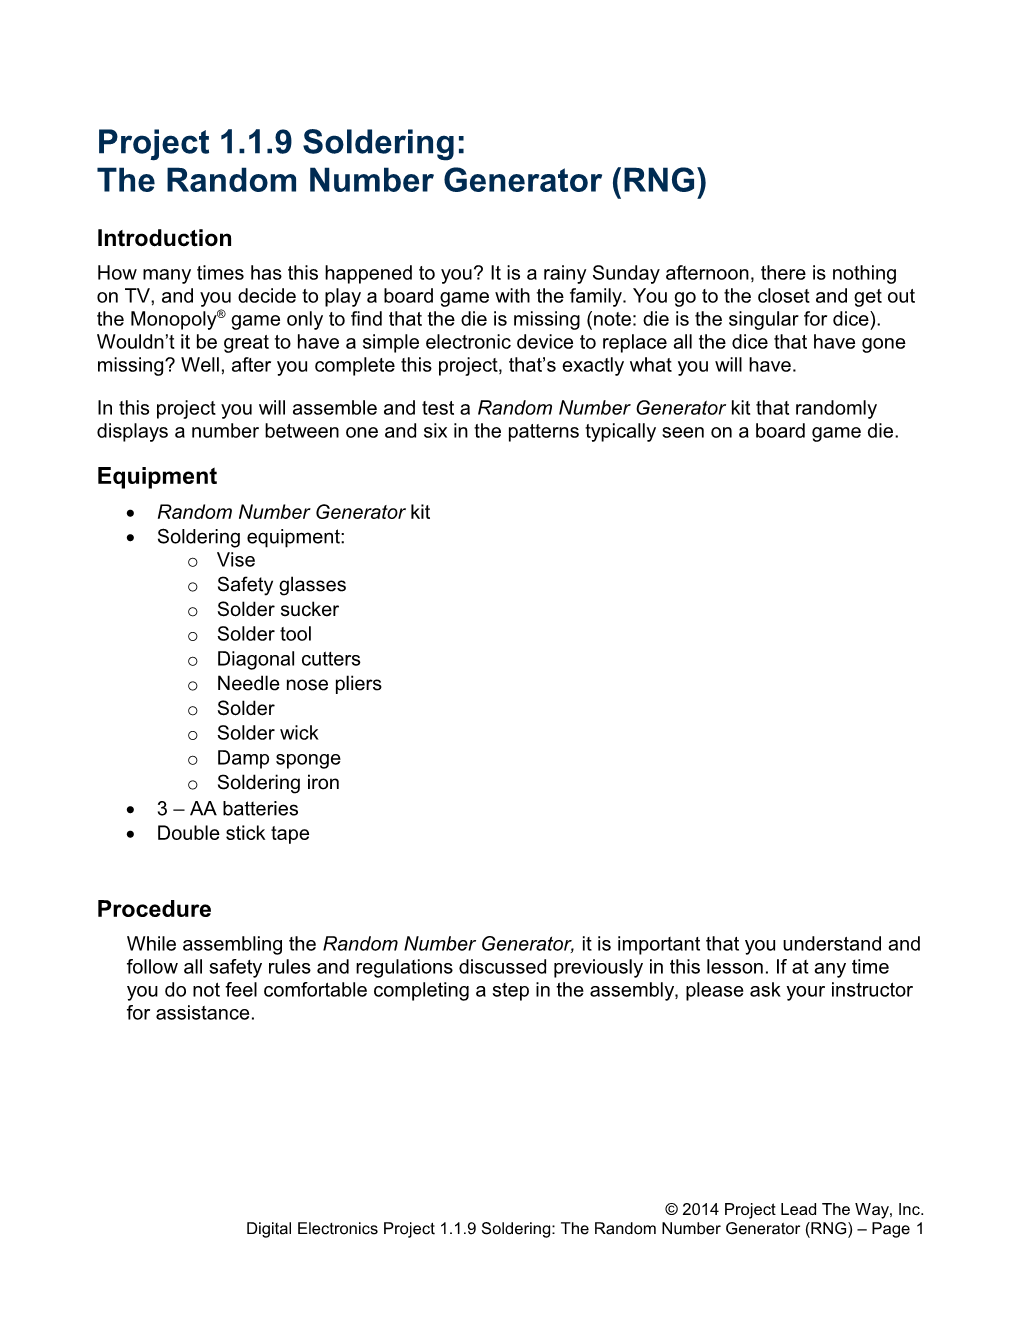 1.1.9.P the Random Number Generator